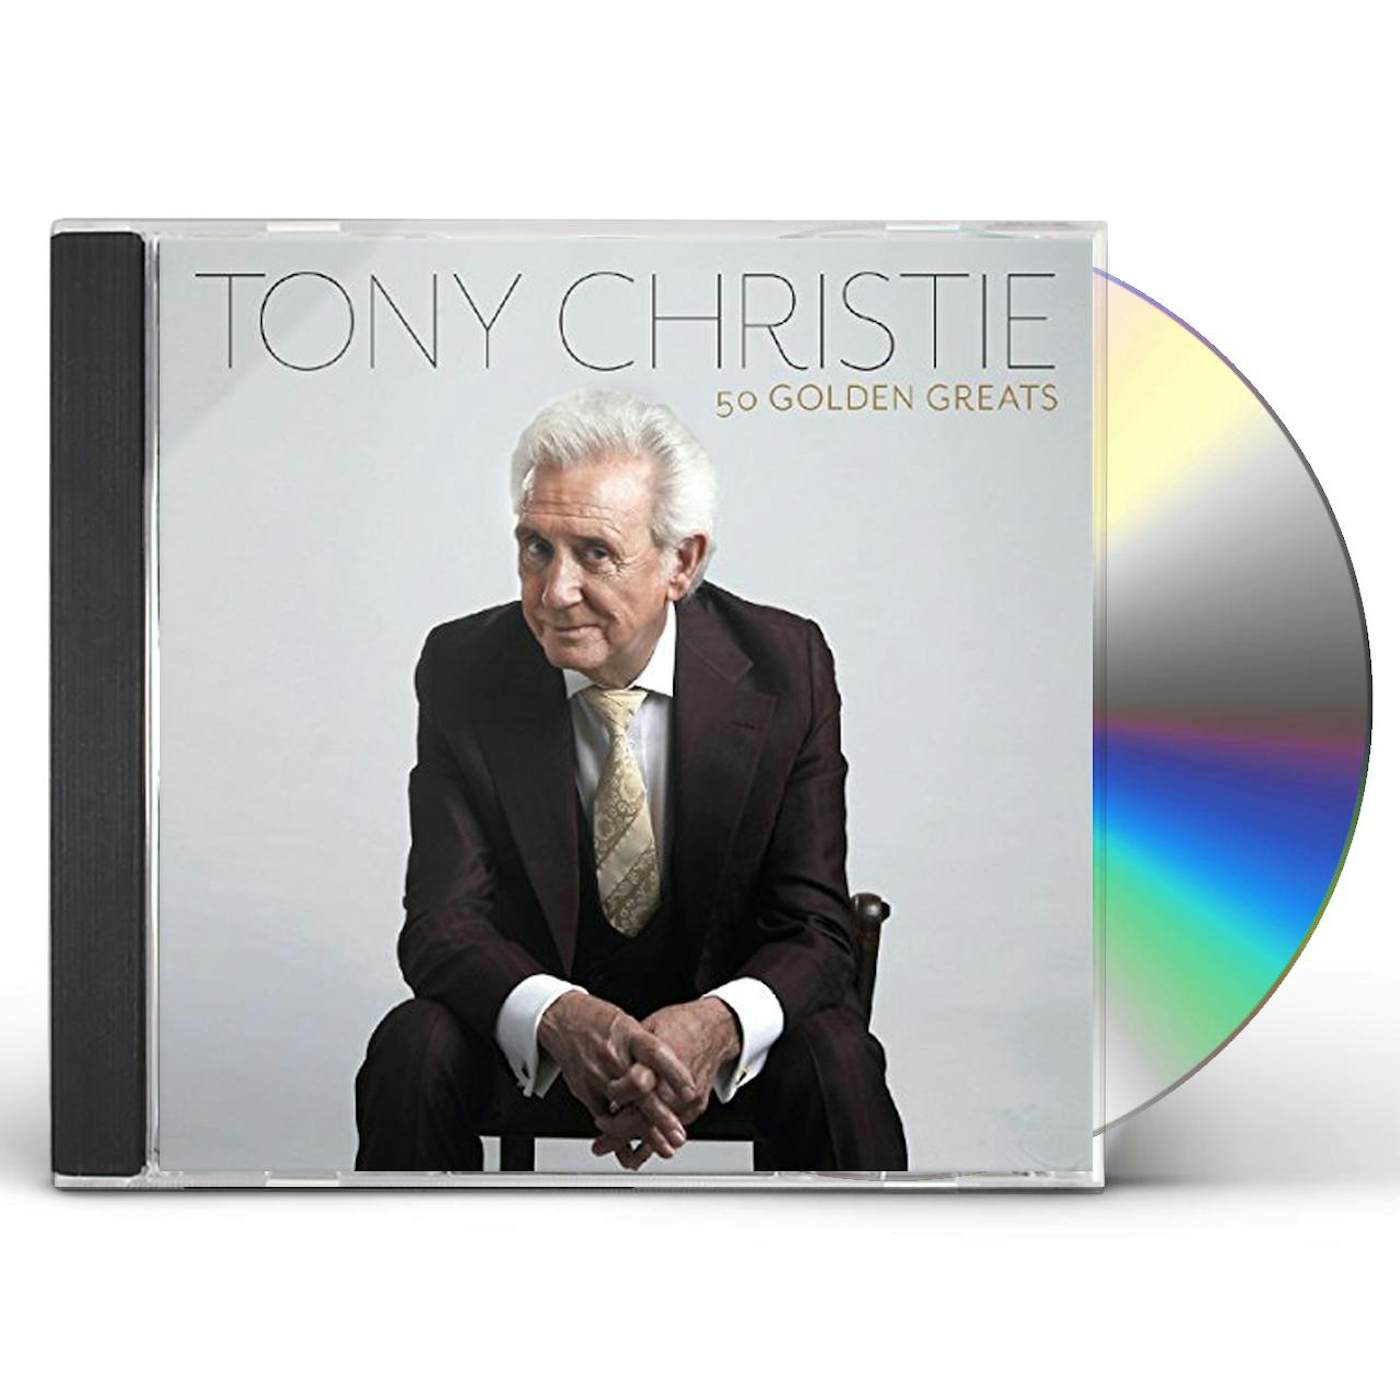 Tony Christie 50 GOLDEN GREATS CD